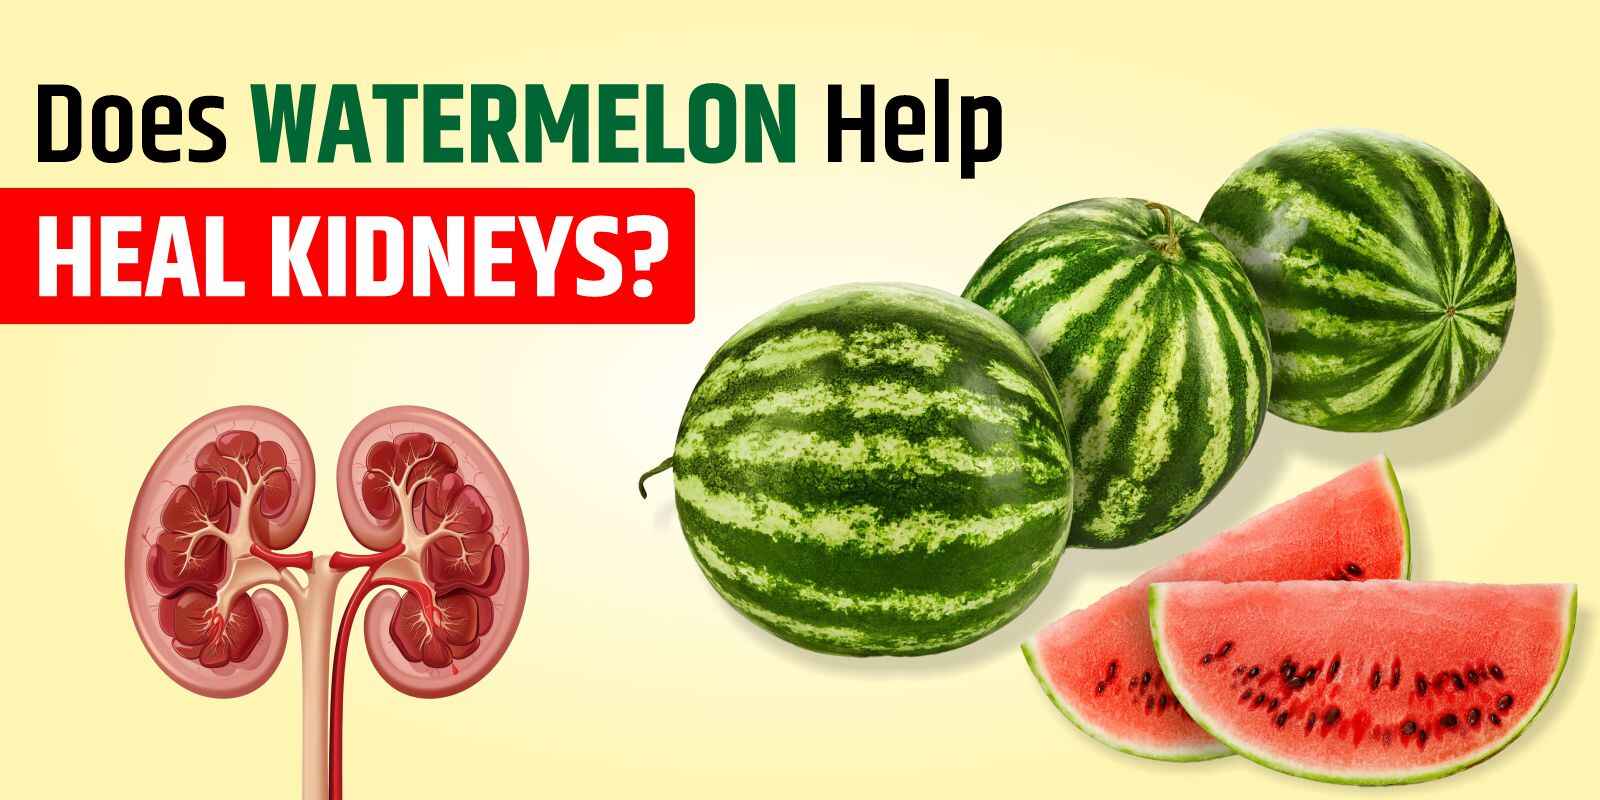 Does Watermelon Help Heal Kidneys?